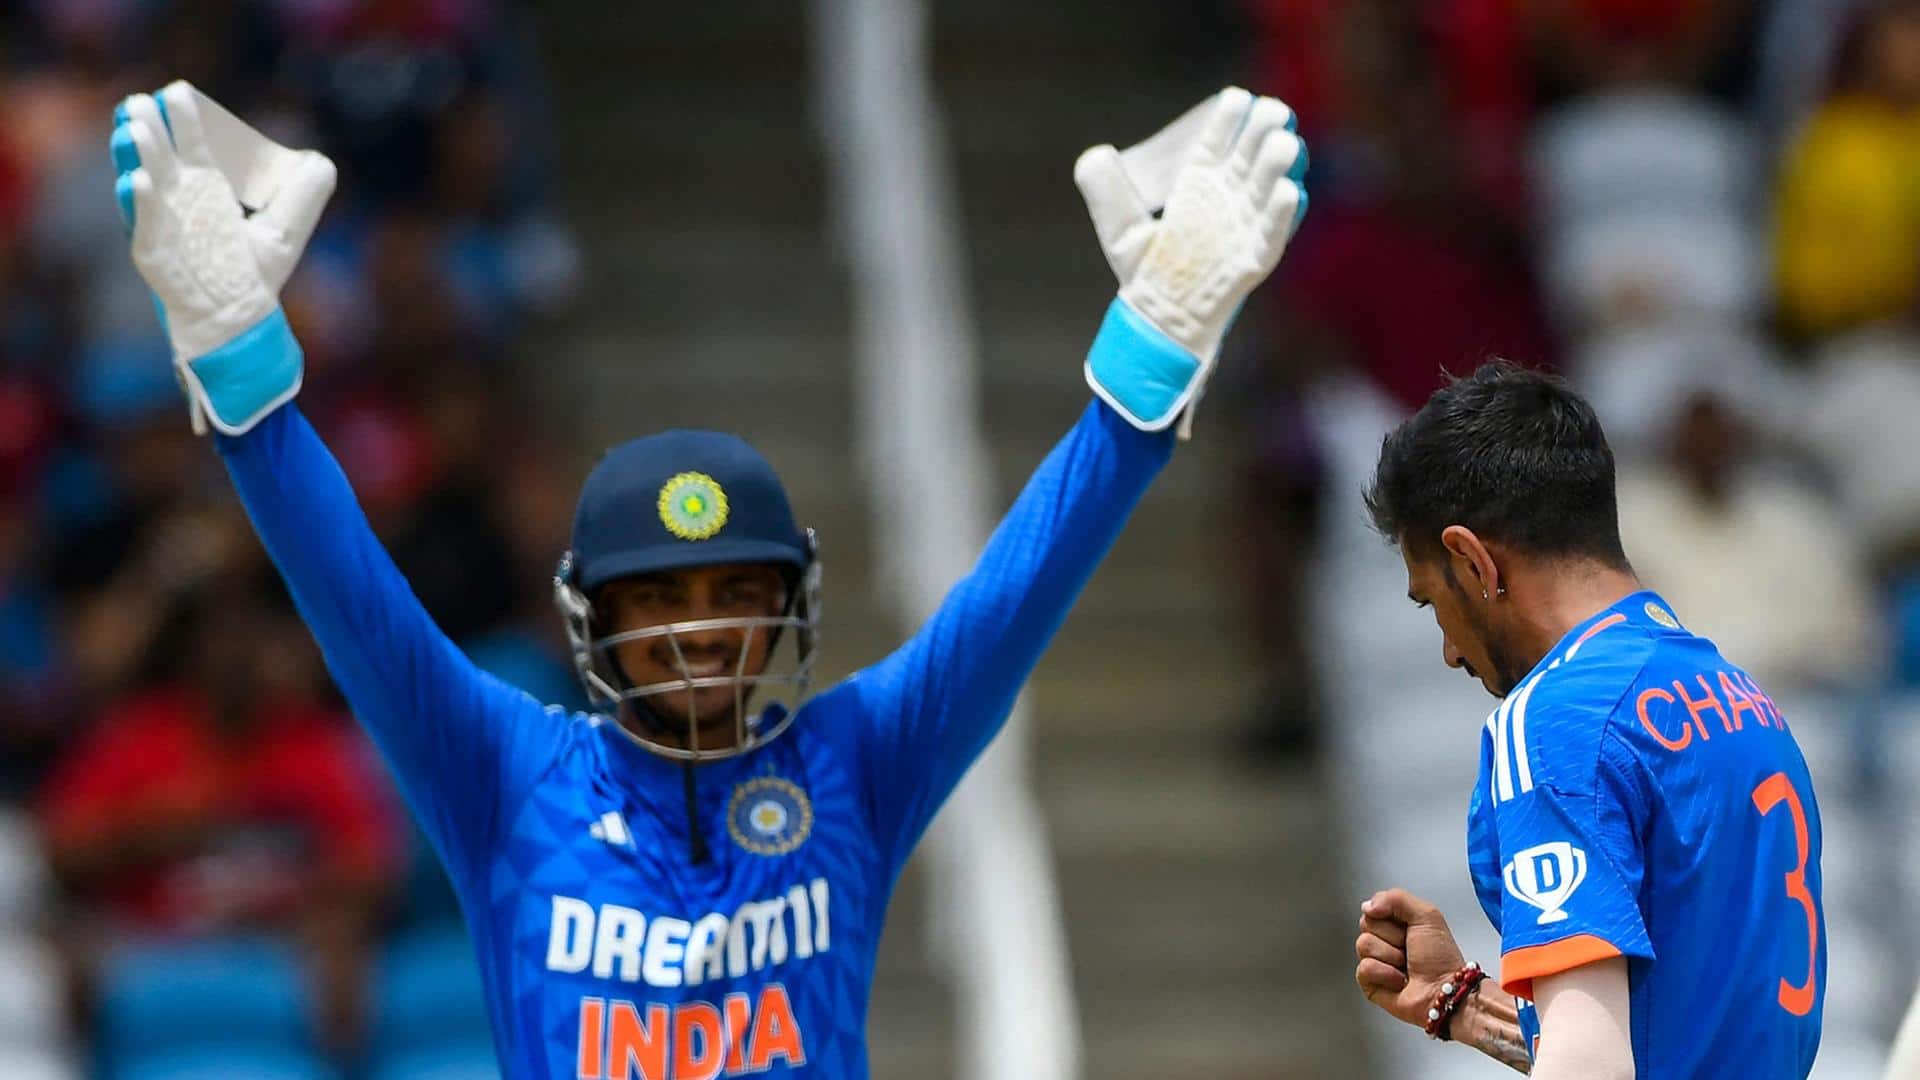 West Indies vs India, 1st T20I: Hosts set 150-run target